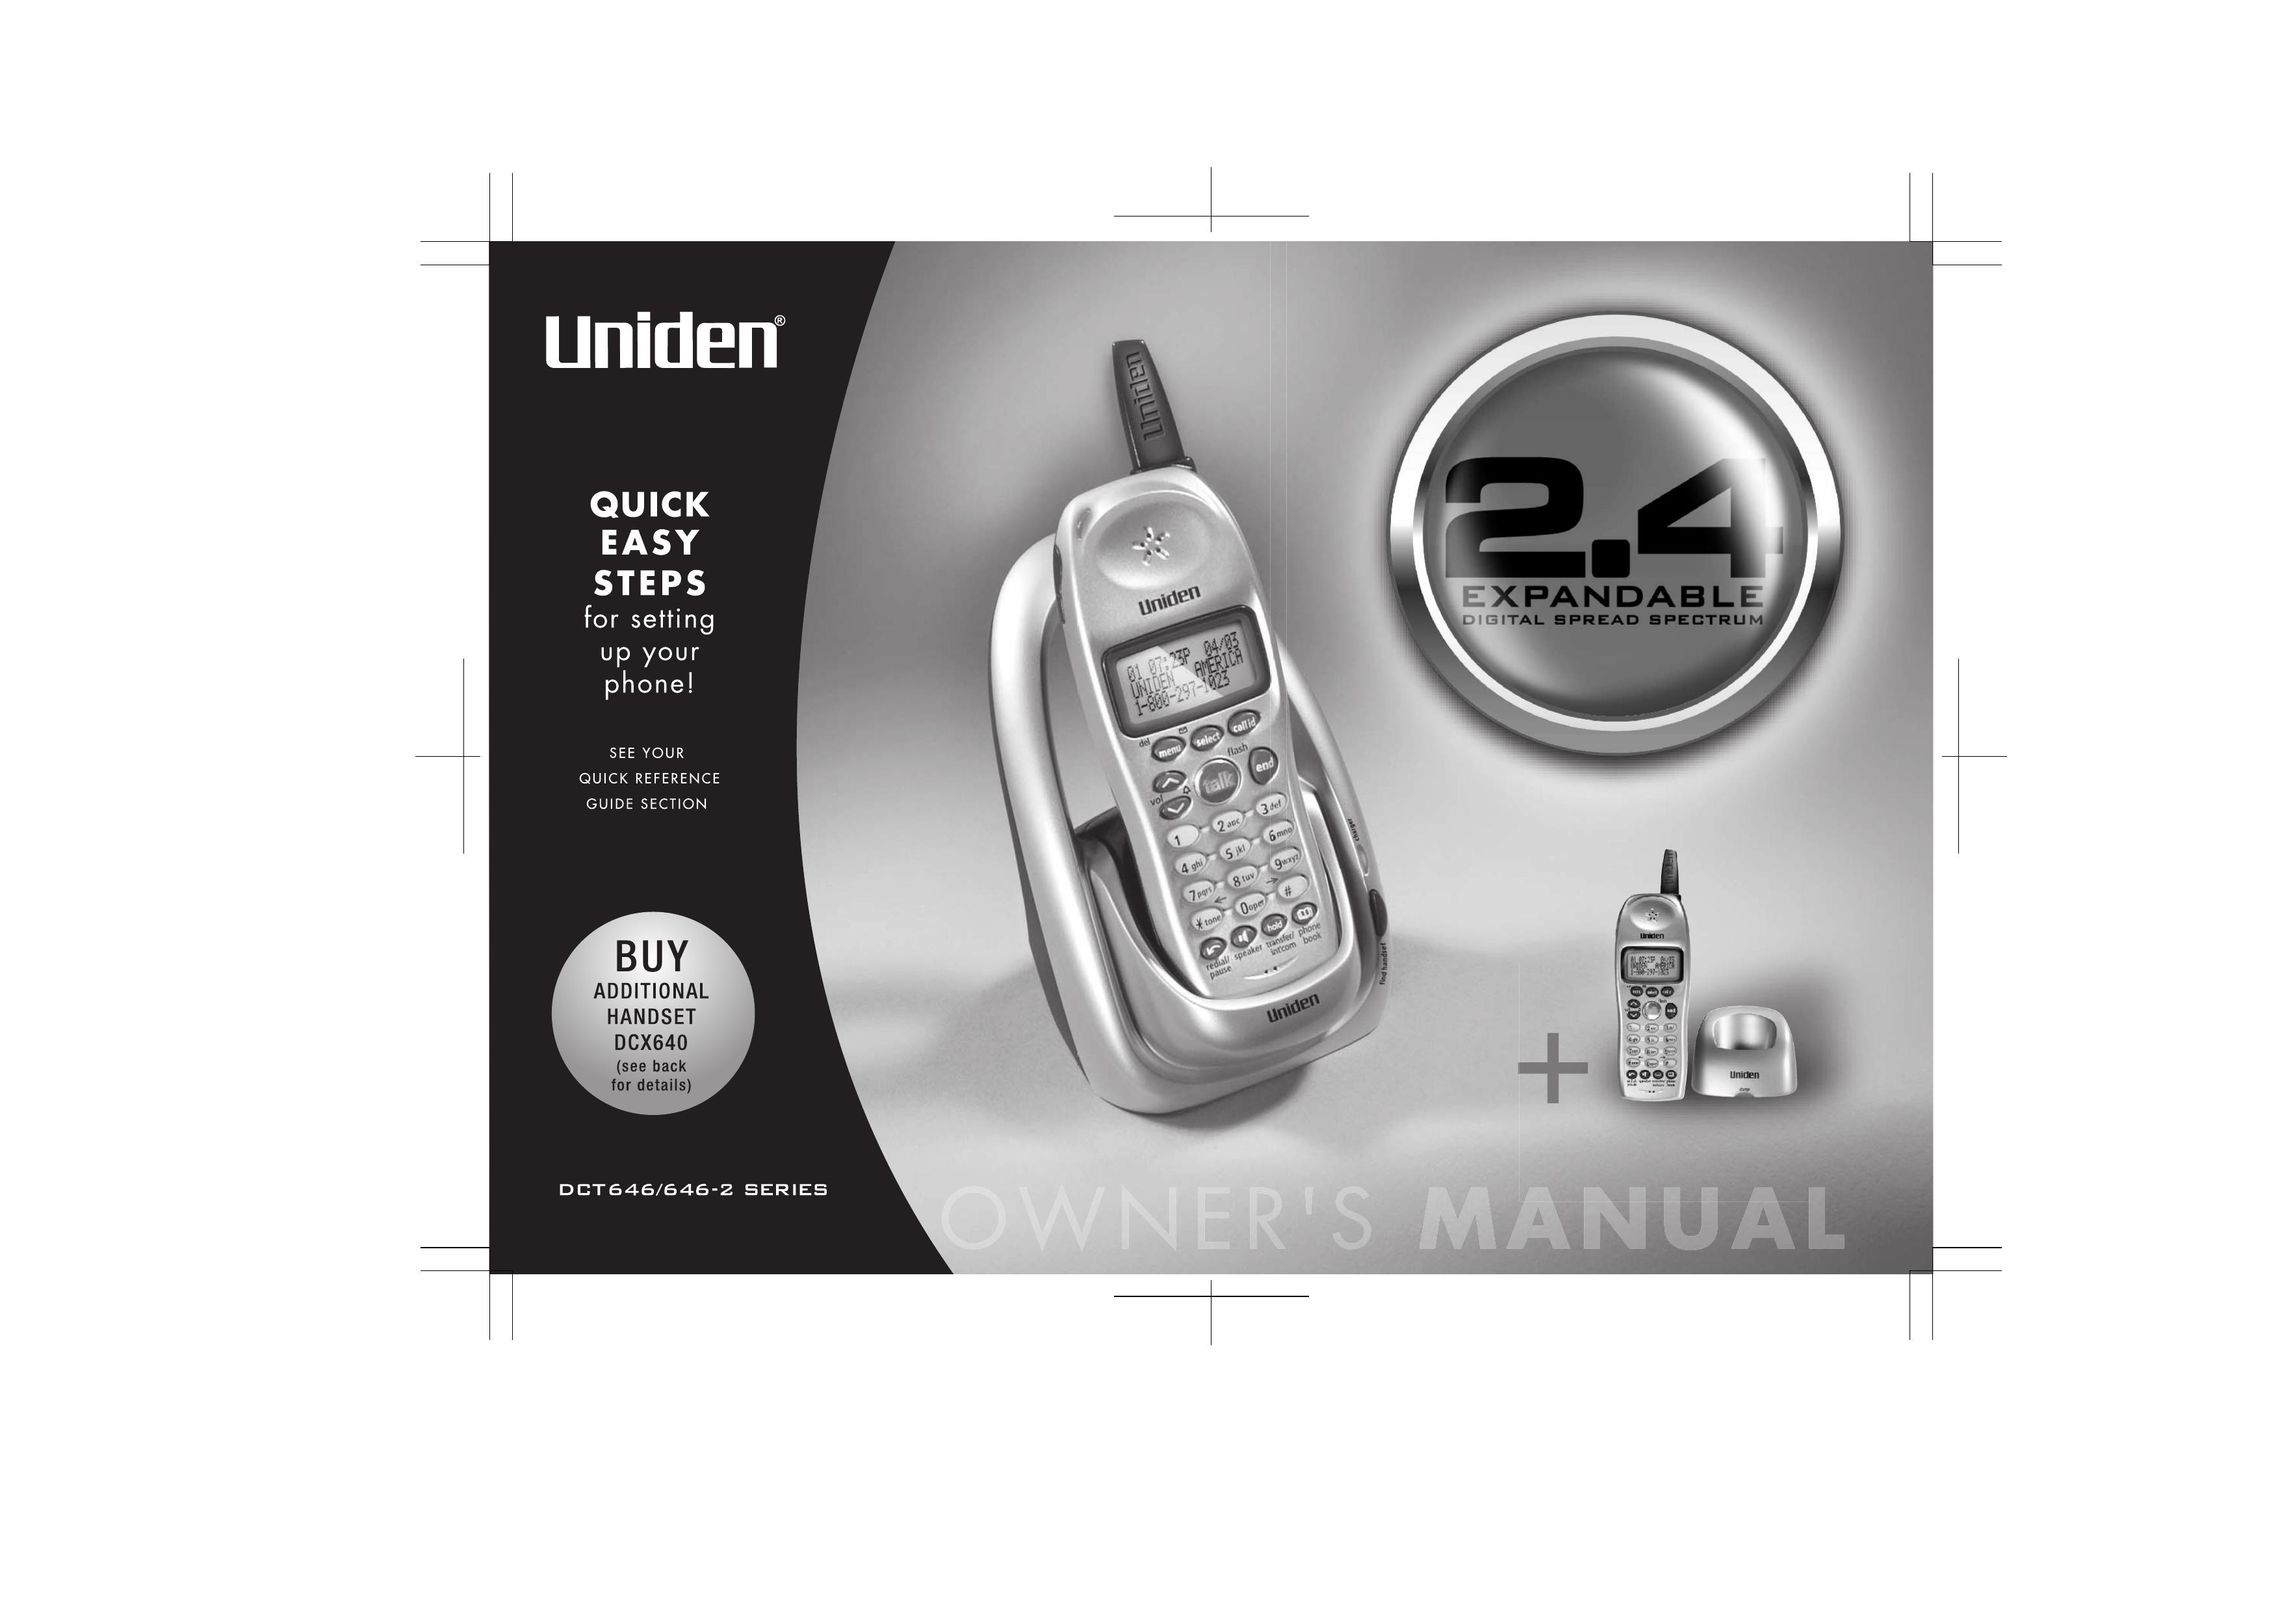 Uniden 2.4 Cordless Telephone User Manual